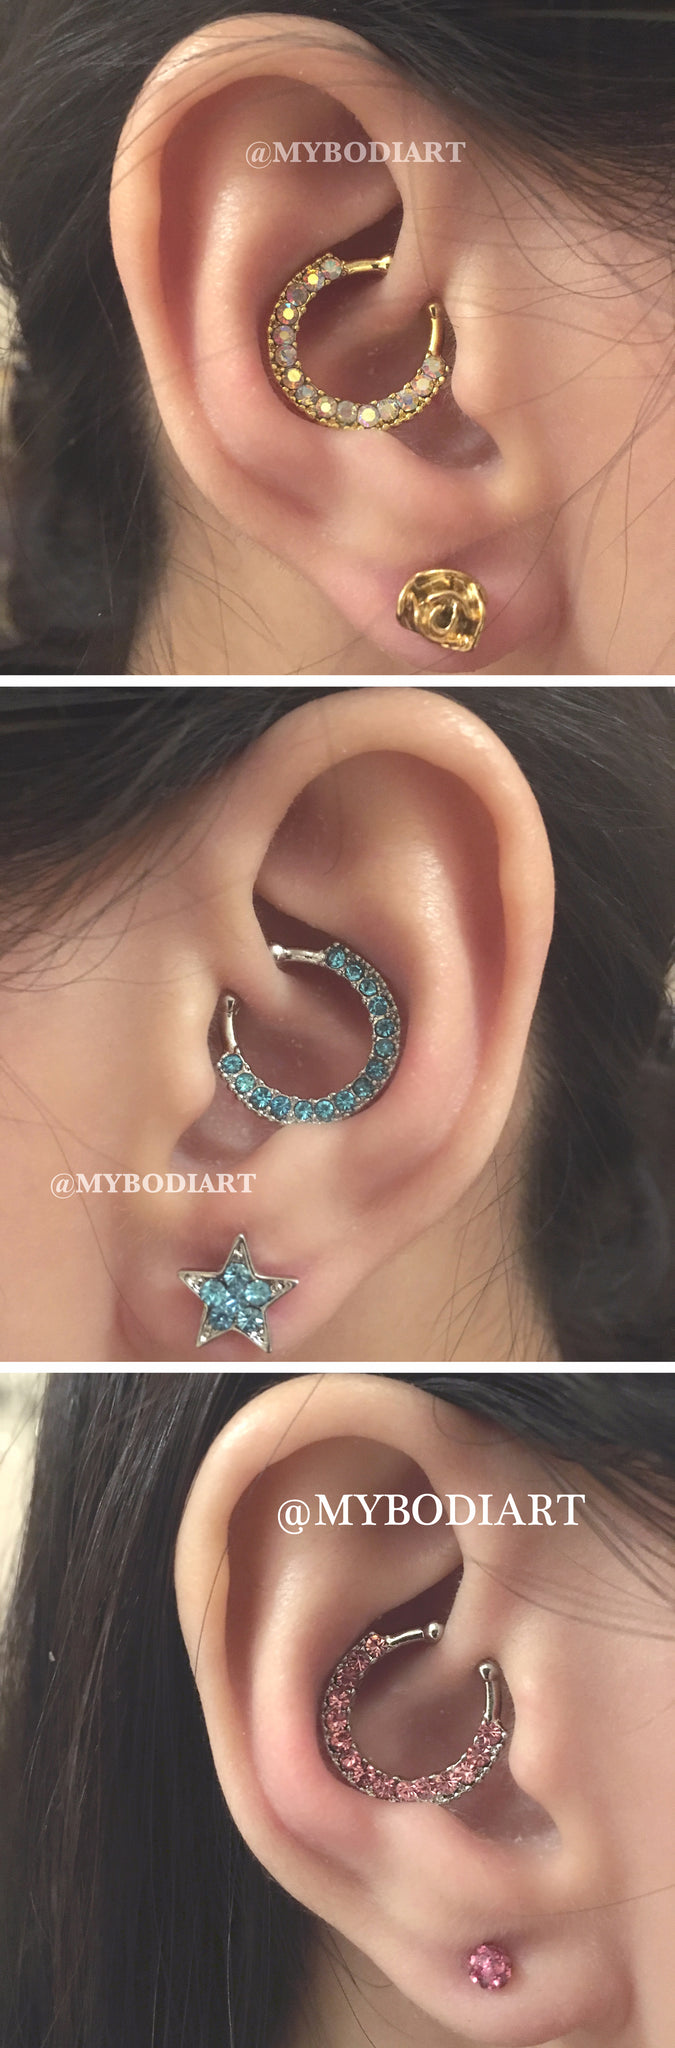 Cute Ear Piercing Ideas - Cartilage Daith Rook Ring Hoop Crystal Earring Stud 16G - www.MyBodiArt.com